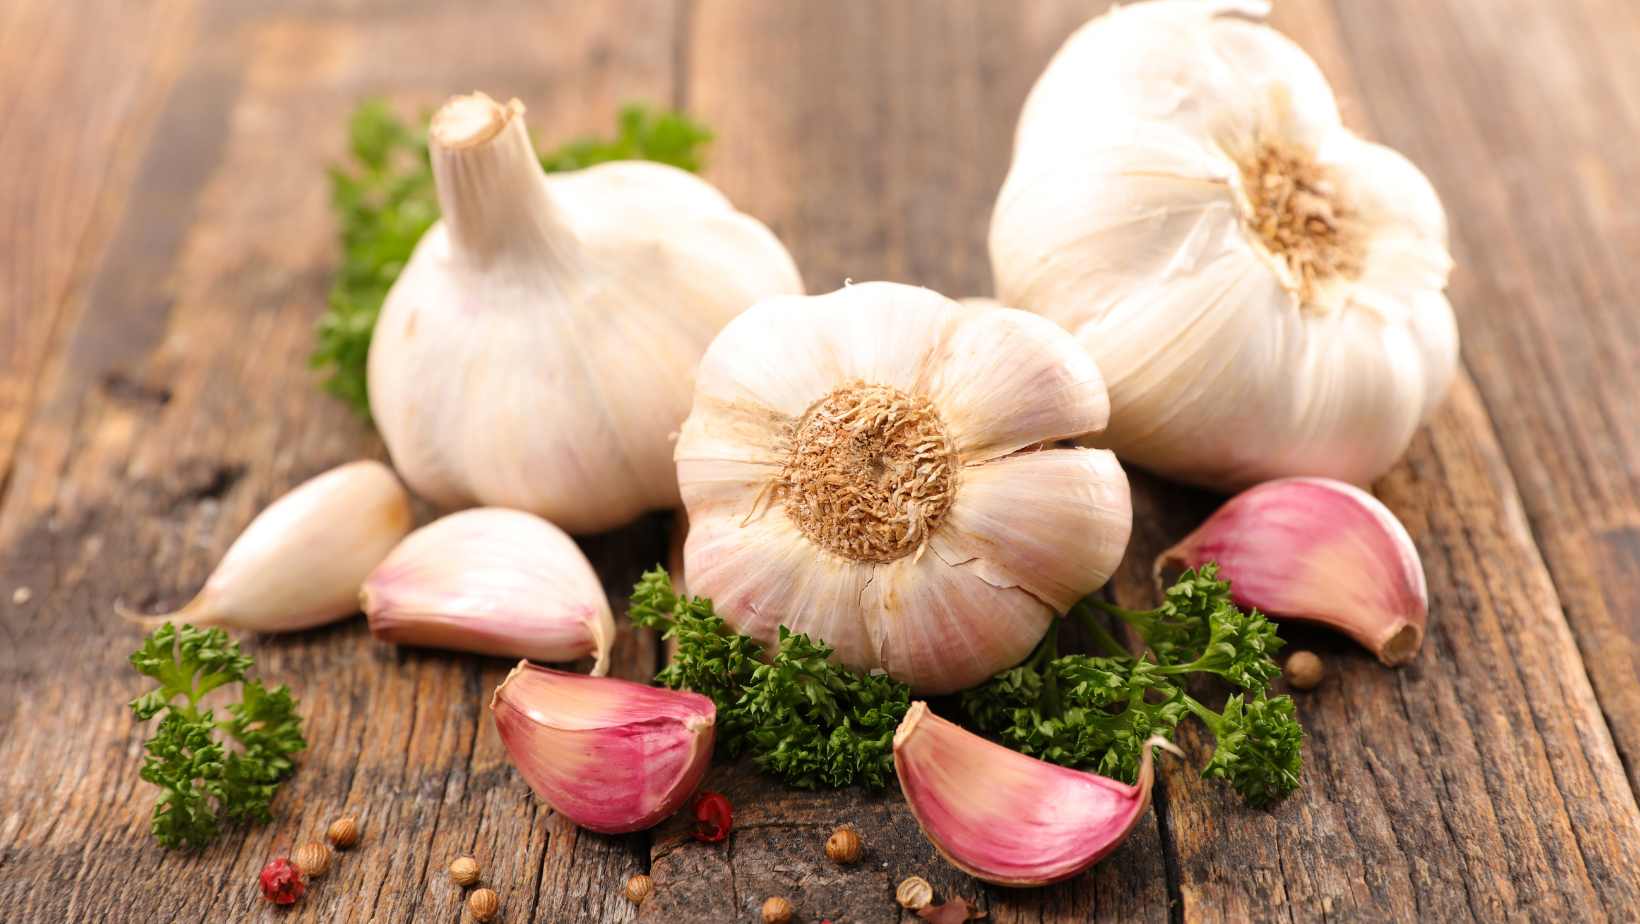 is garlic good for keto